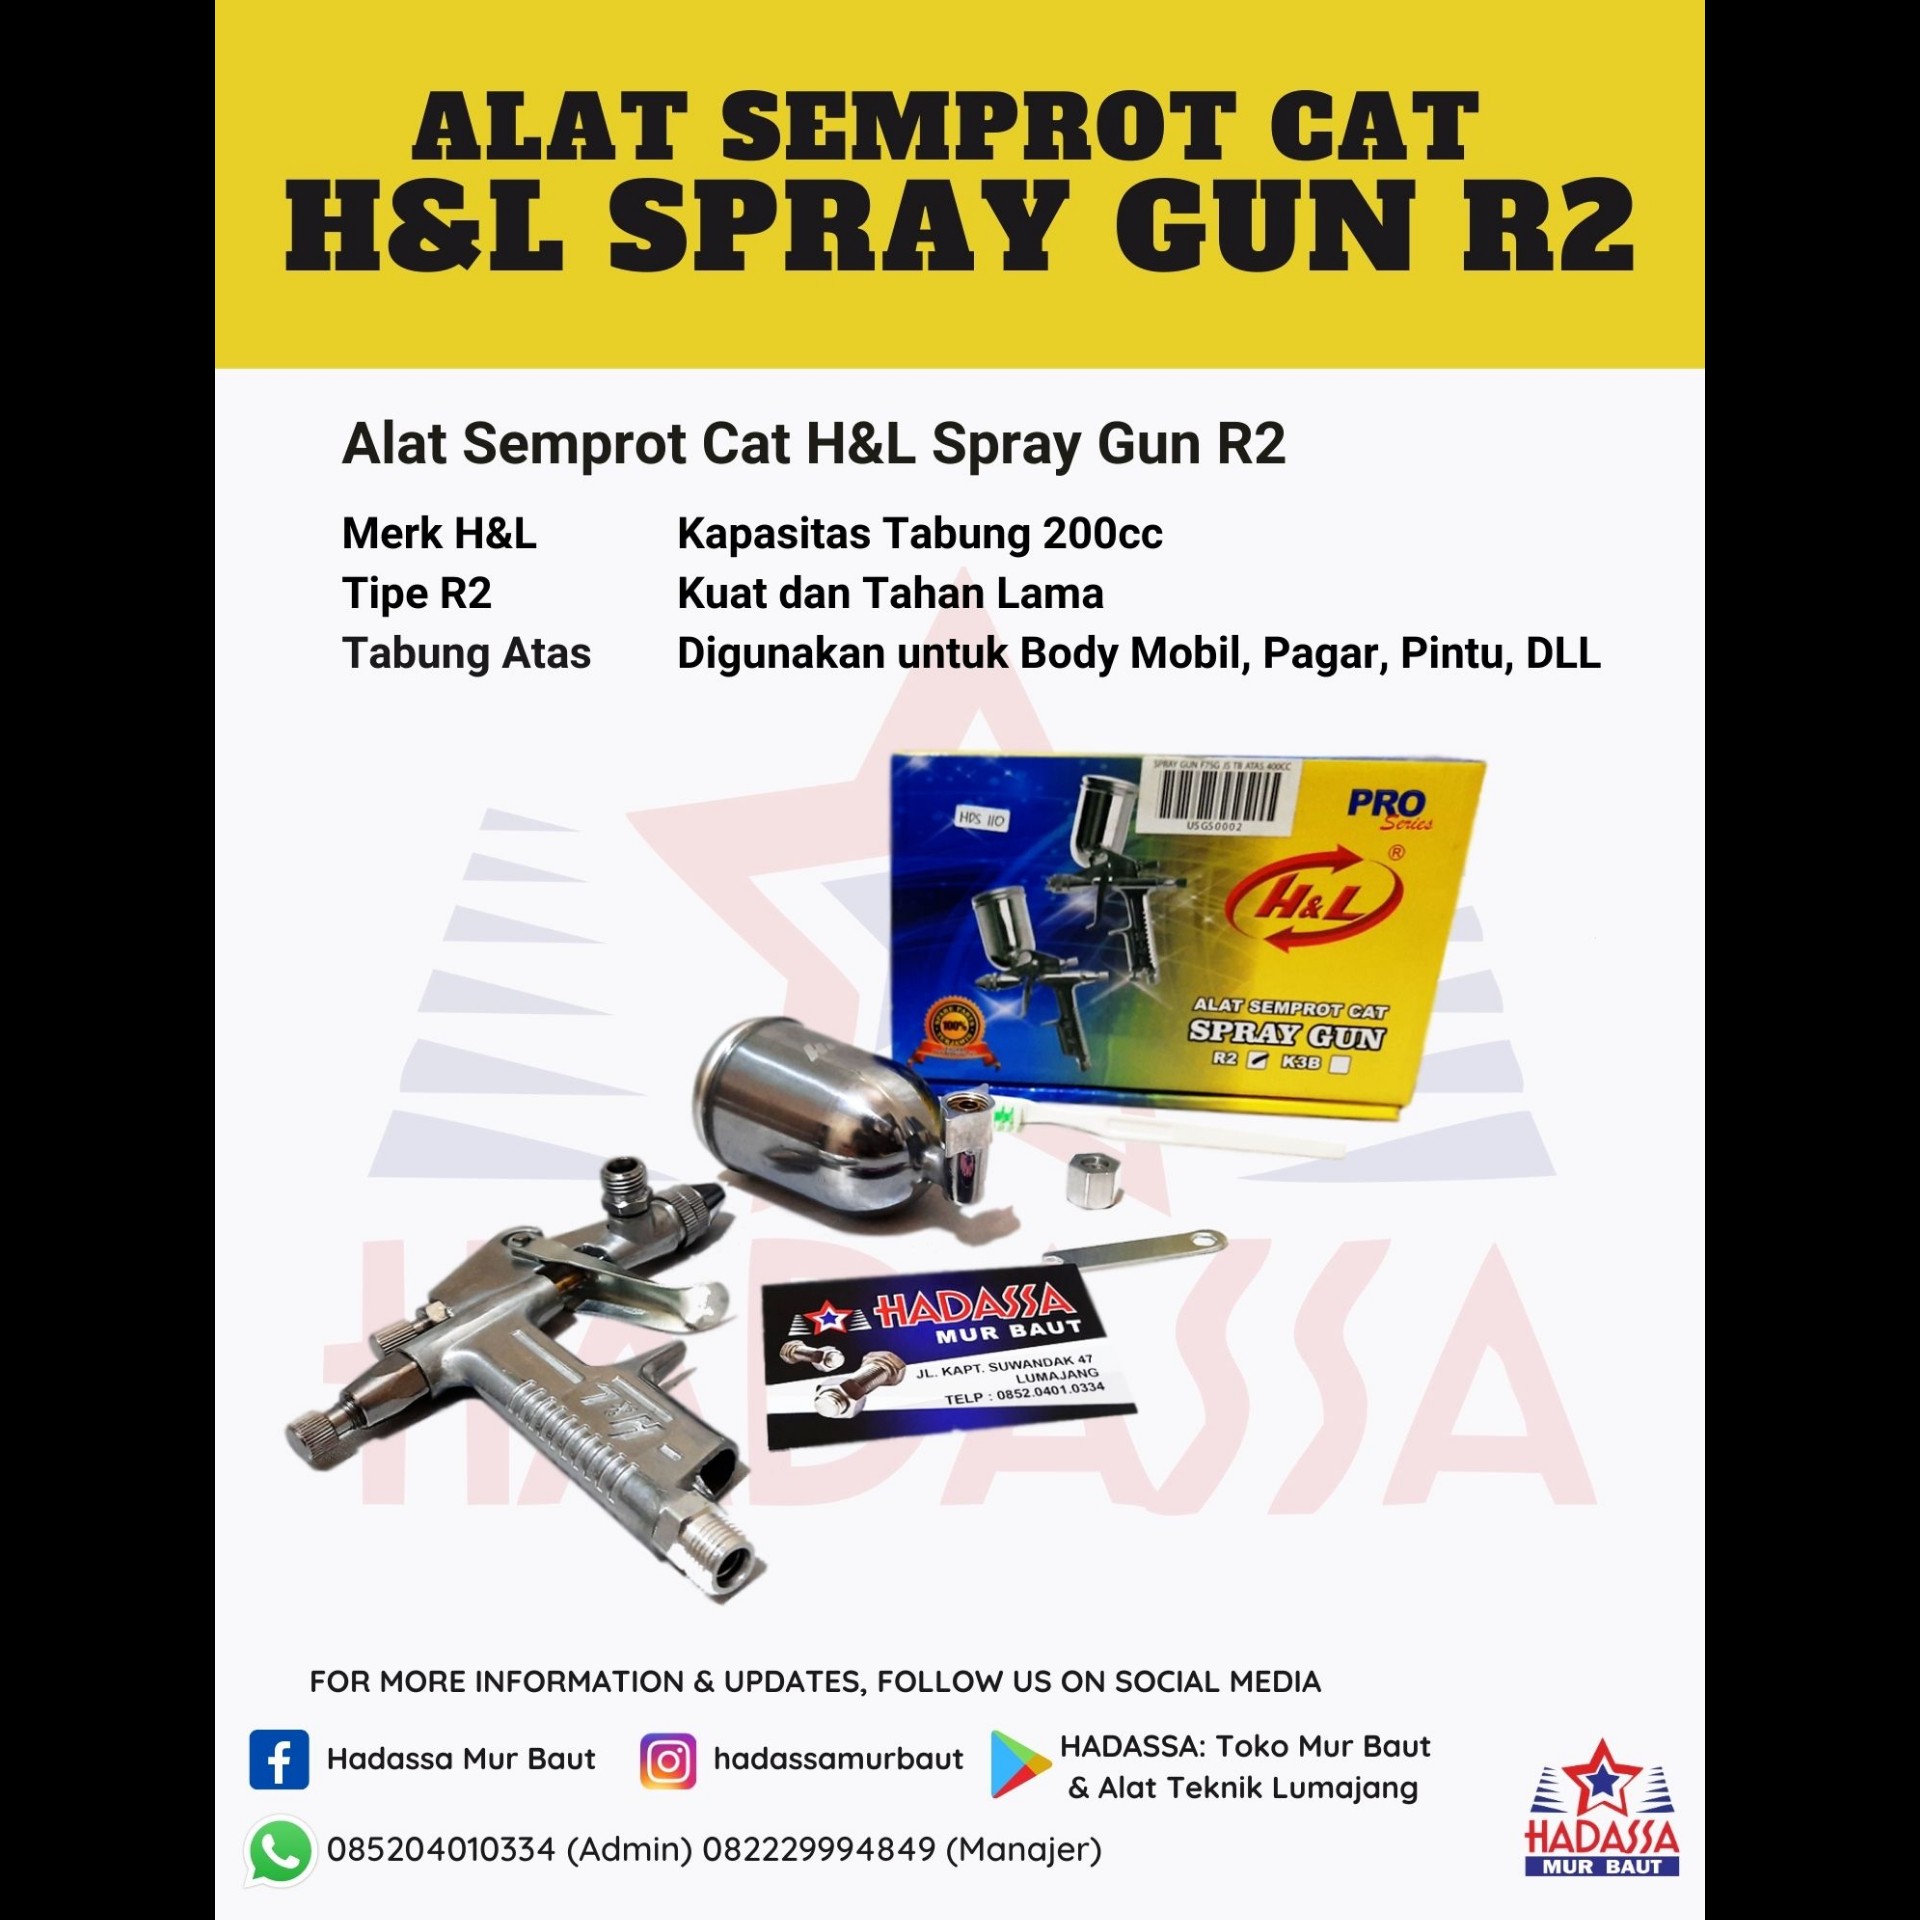 Alat Semprot Cat HL Spray Gun R2